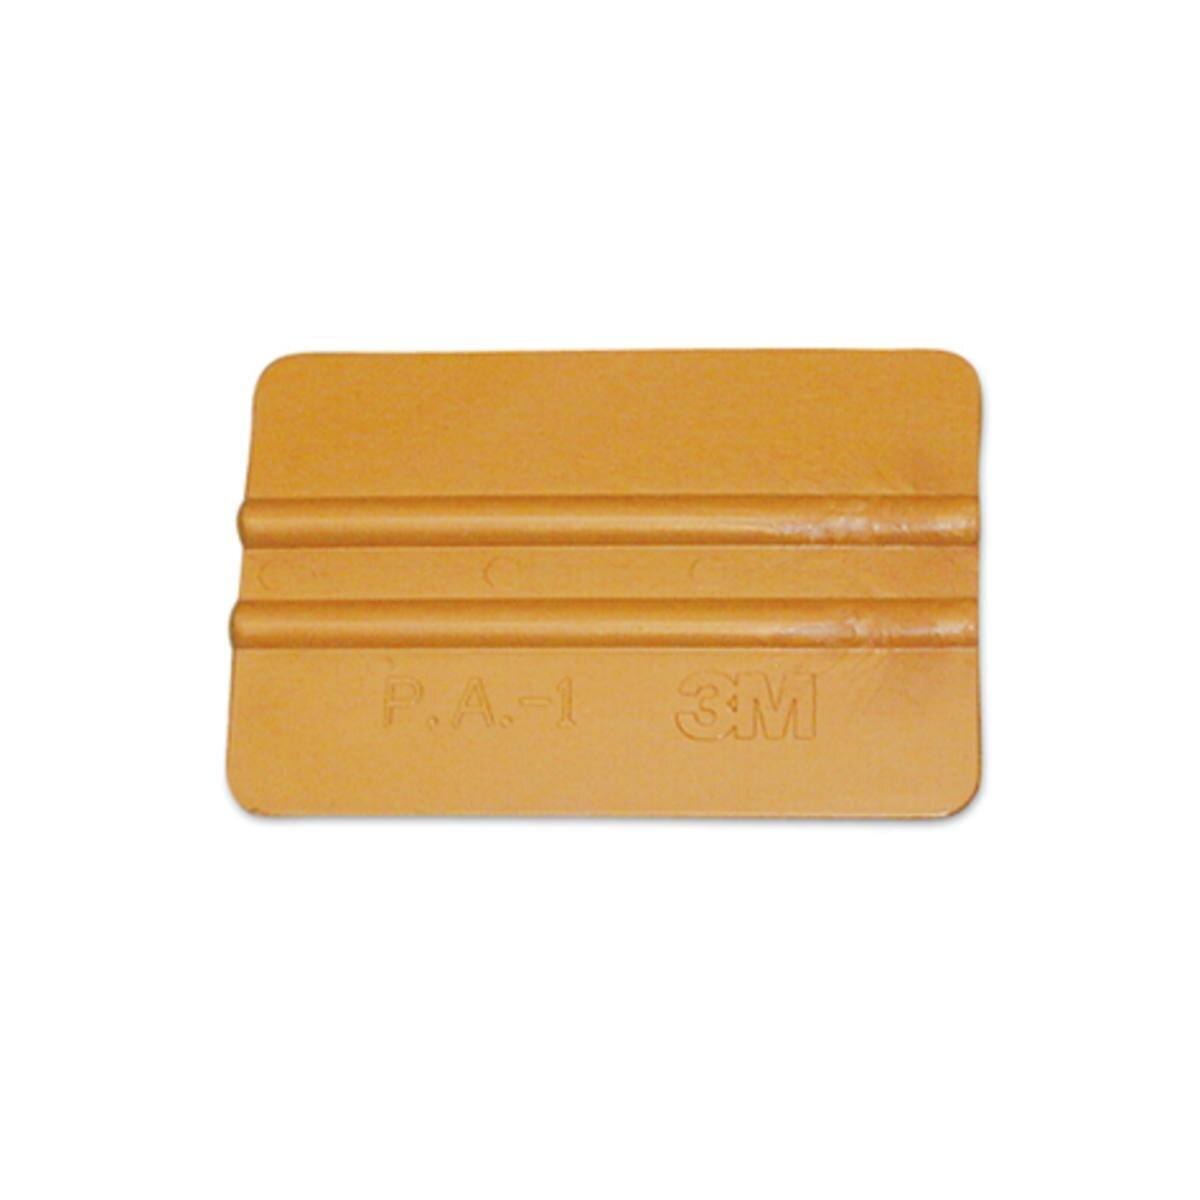 Rasqueta de plástico 3M, dorada (dureza media) 100mmx70mm